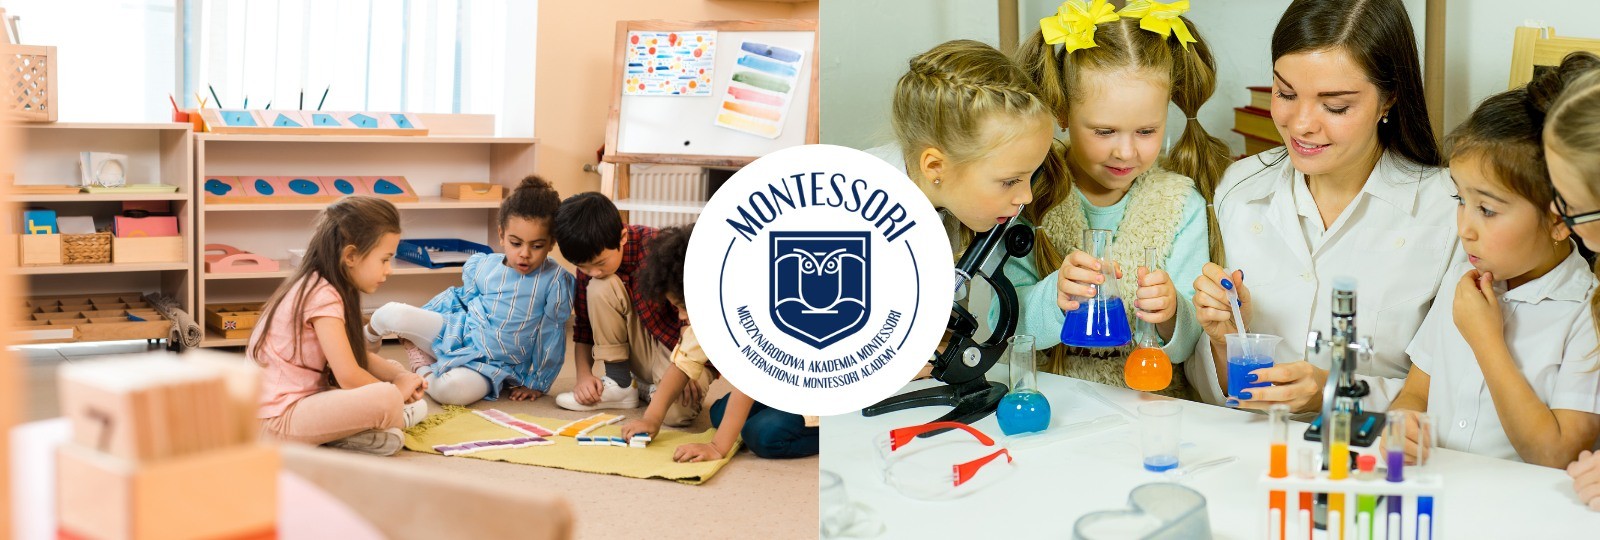 Open days at the International Montessori Academy